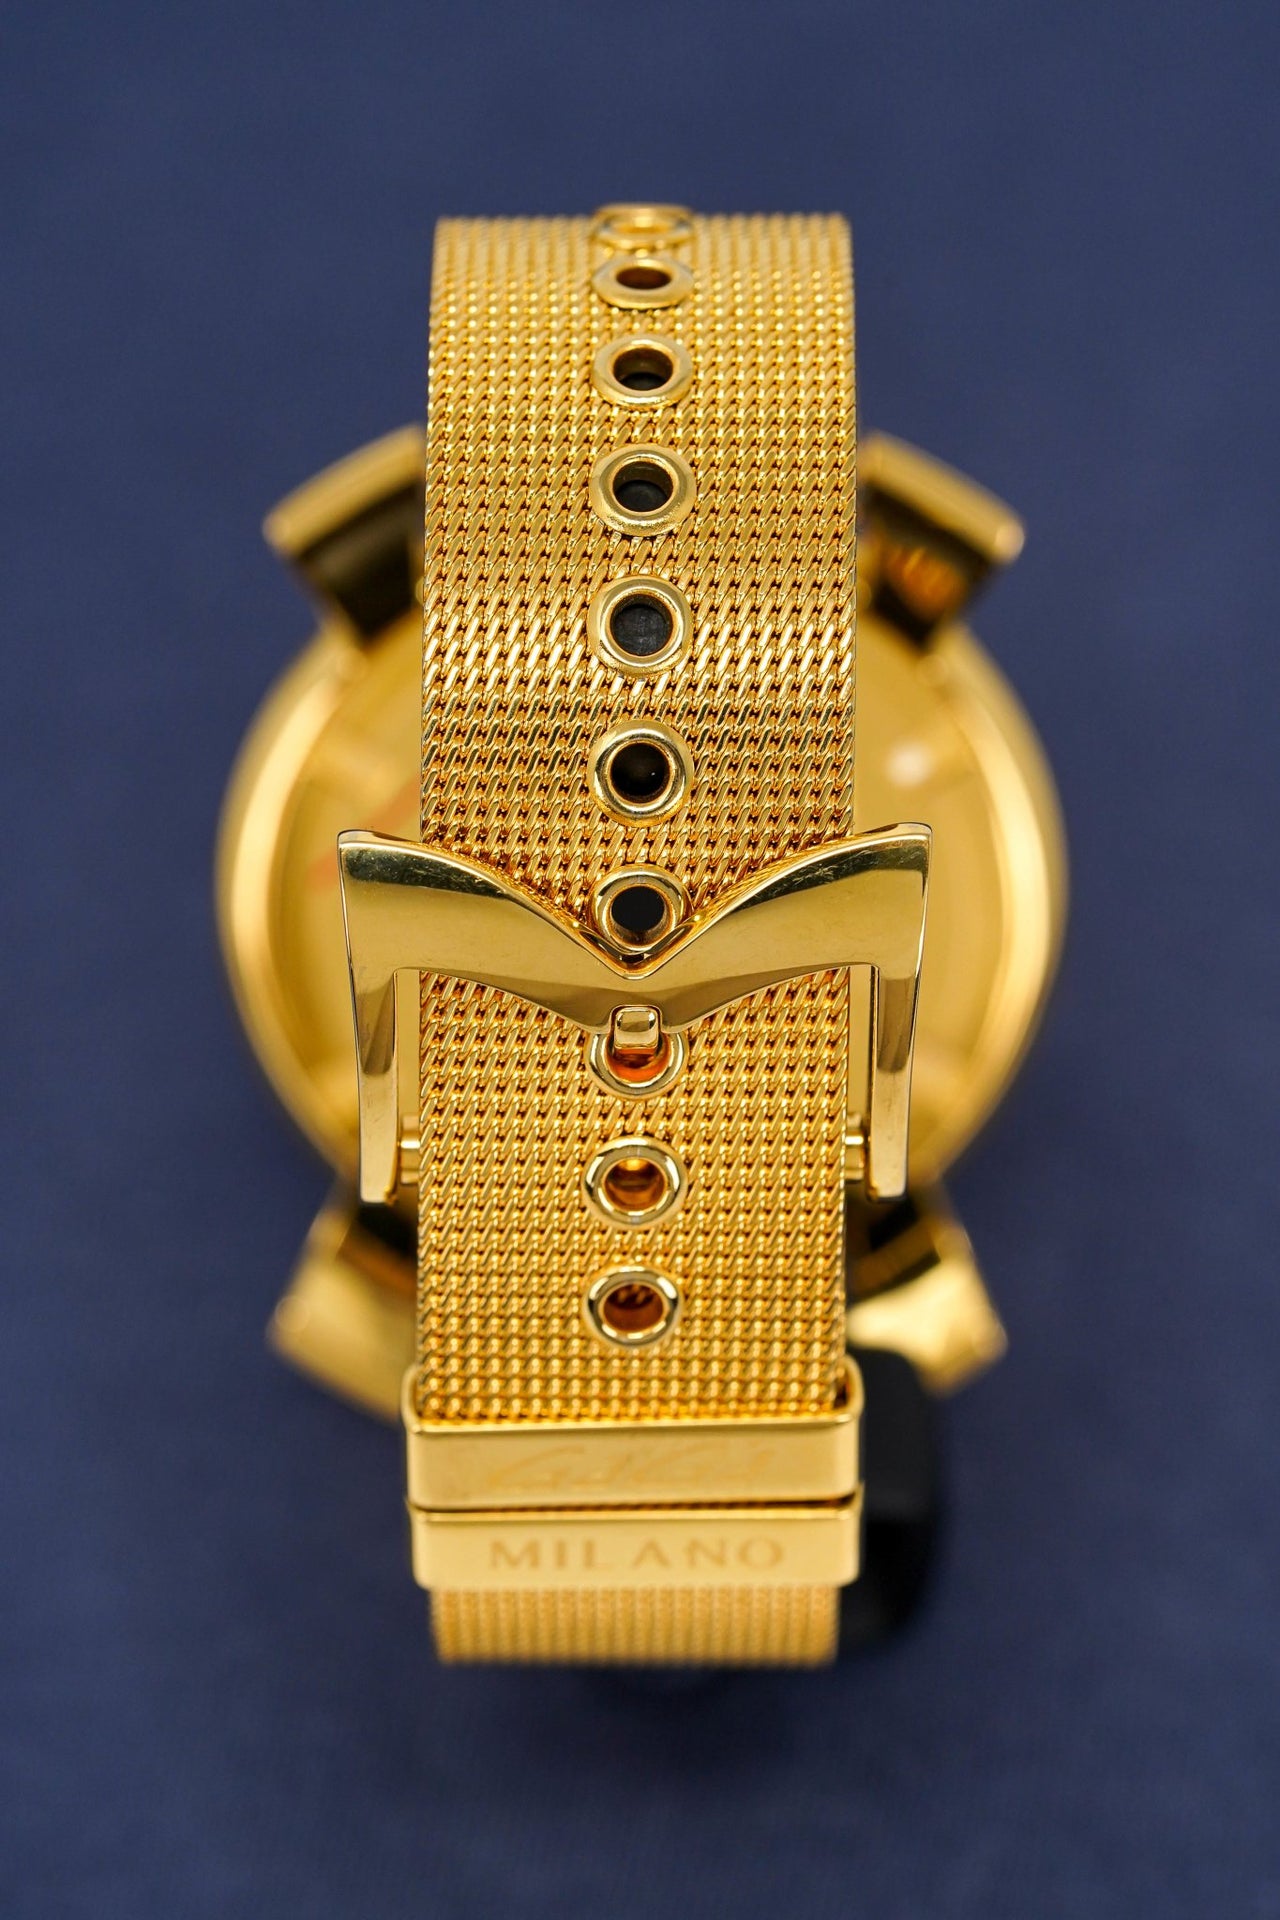 Gagà Milano Watch Slim 46mm Neymar Jr. Limited Edition 5083.NY01 - Watches & Crystals